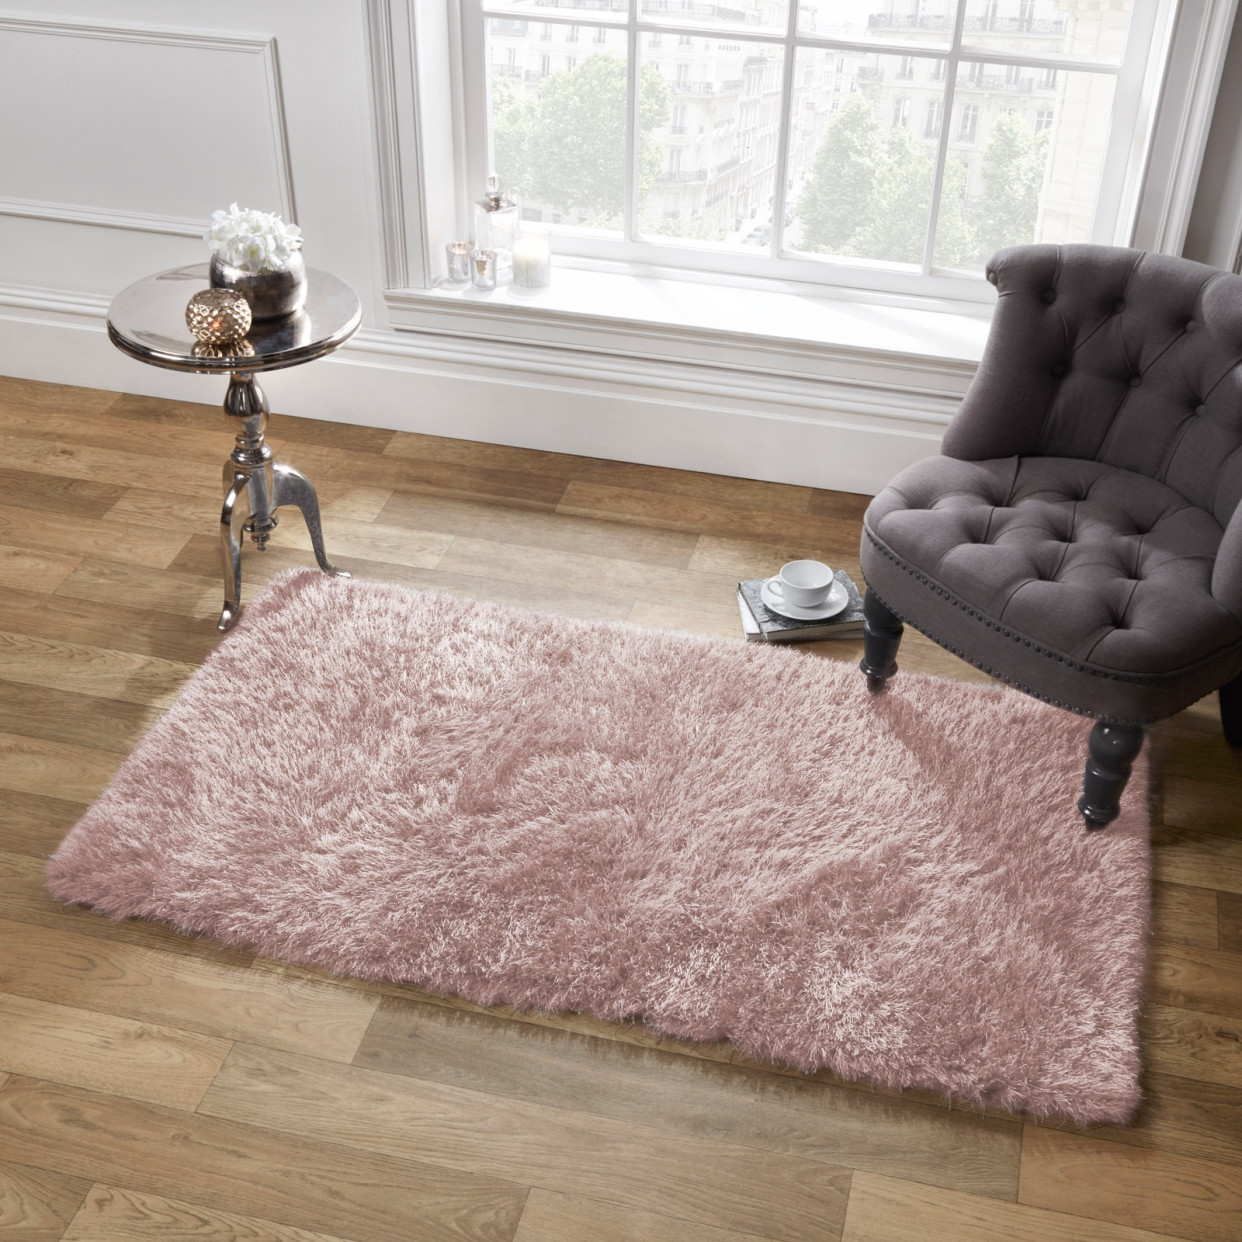 Sienna Large Shaggy Soft Floor Rug 5cm Pile, Blush Pink - 120 x 170cm>